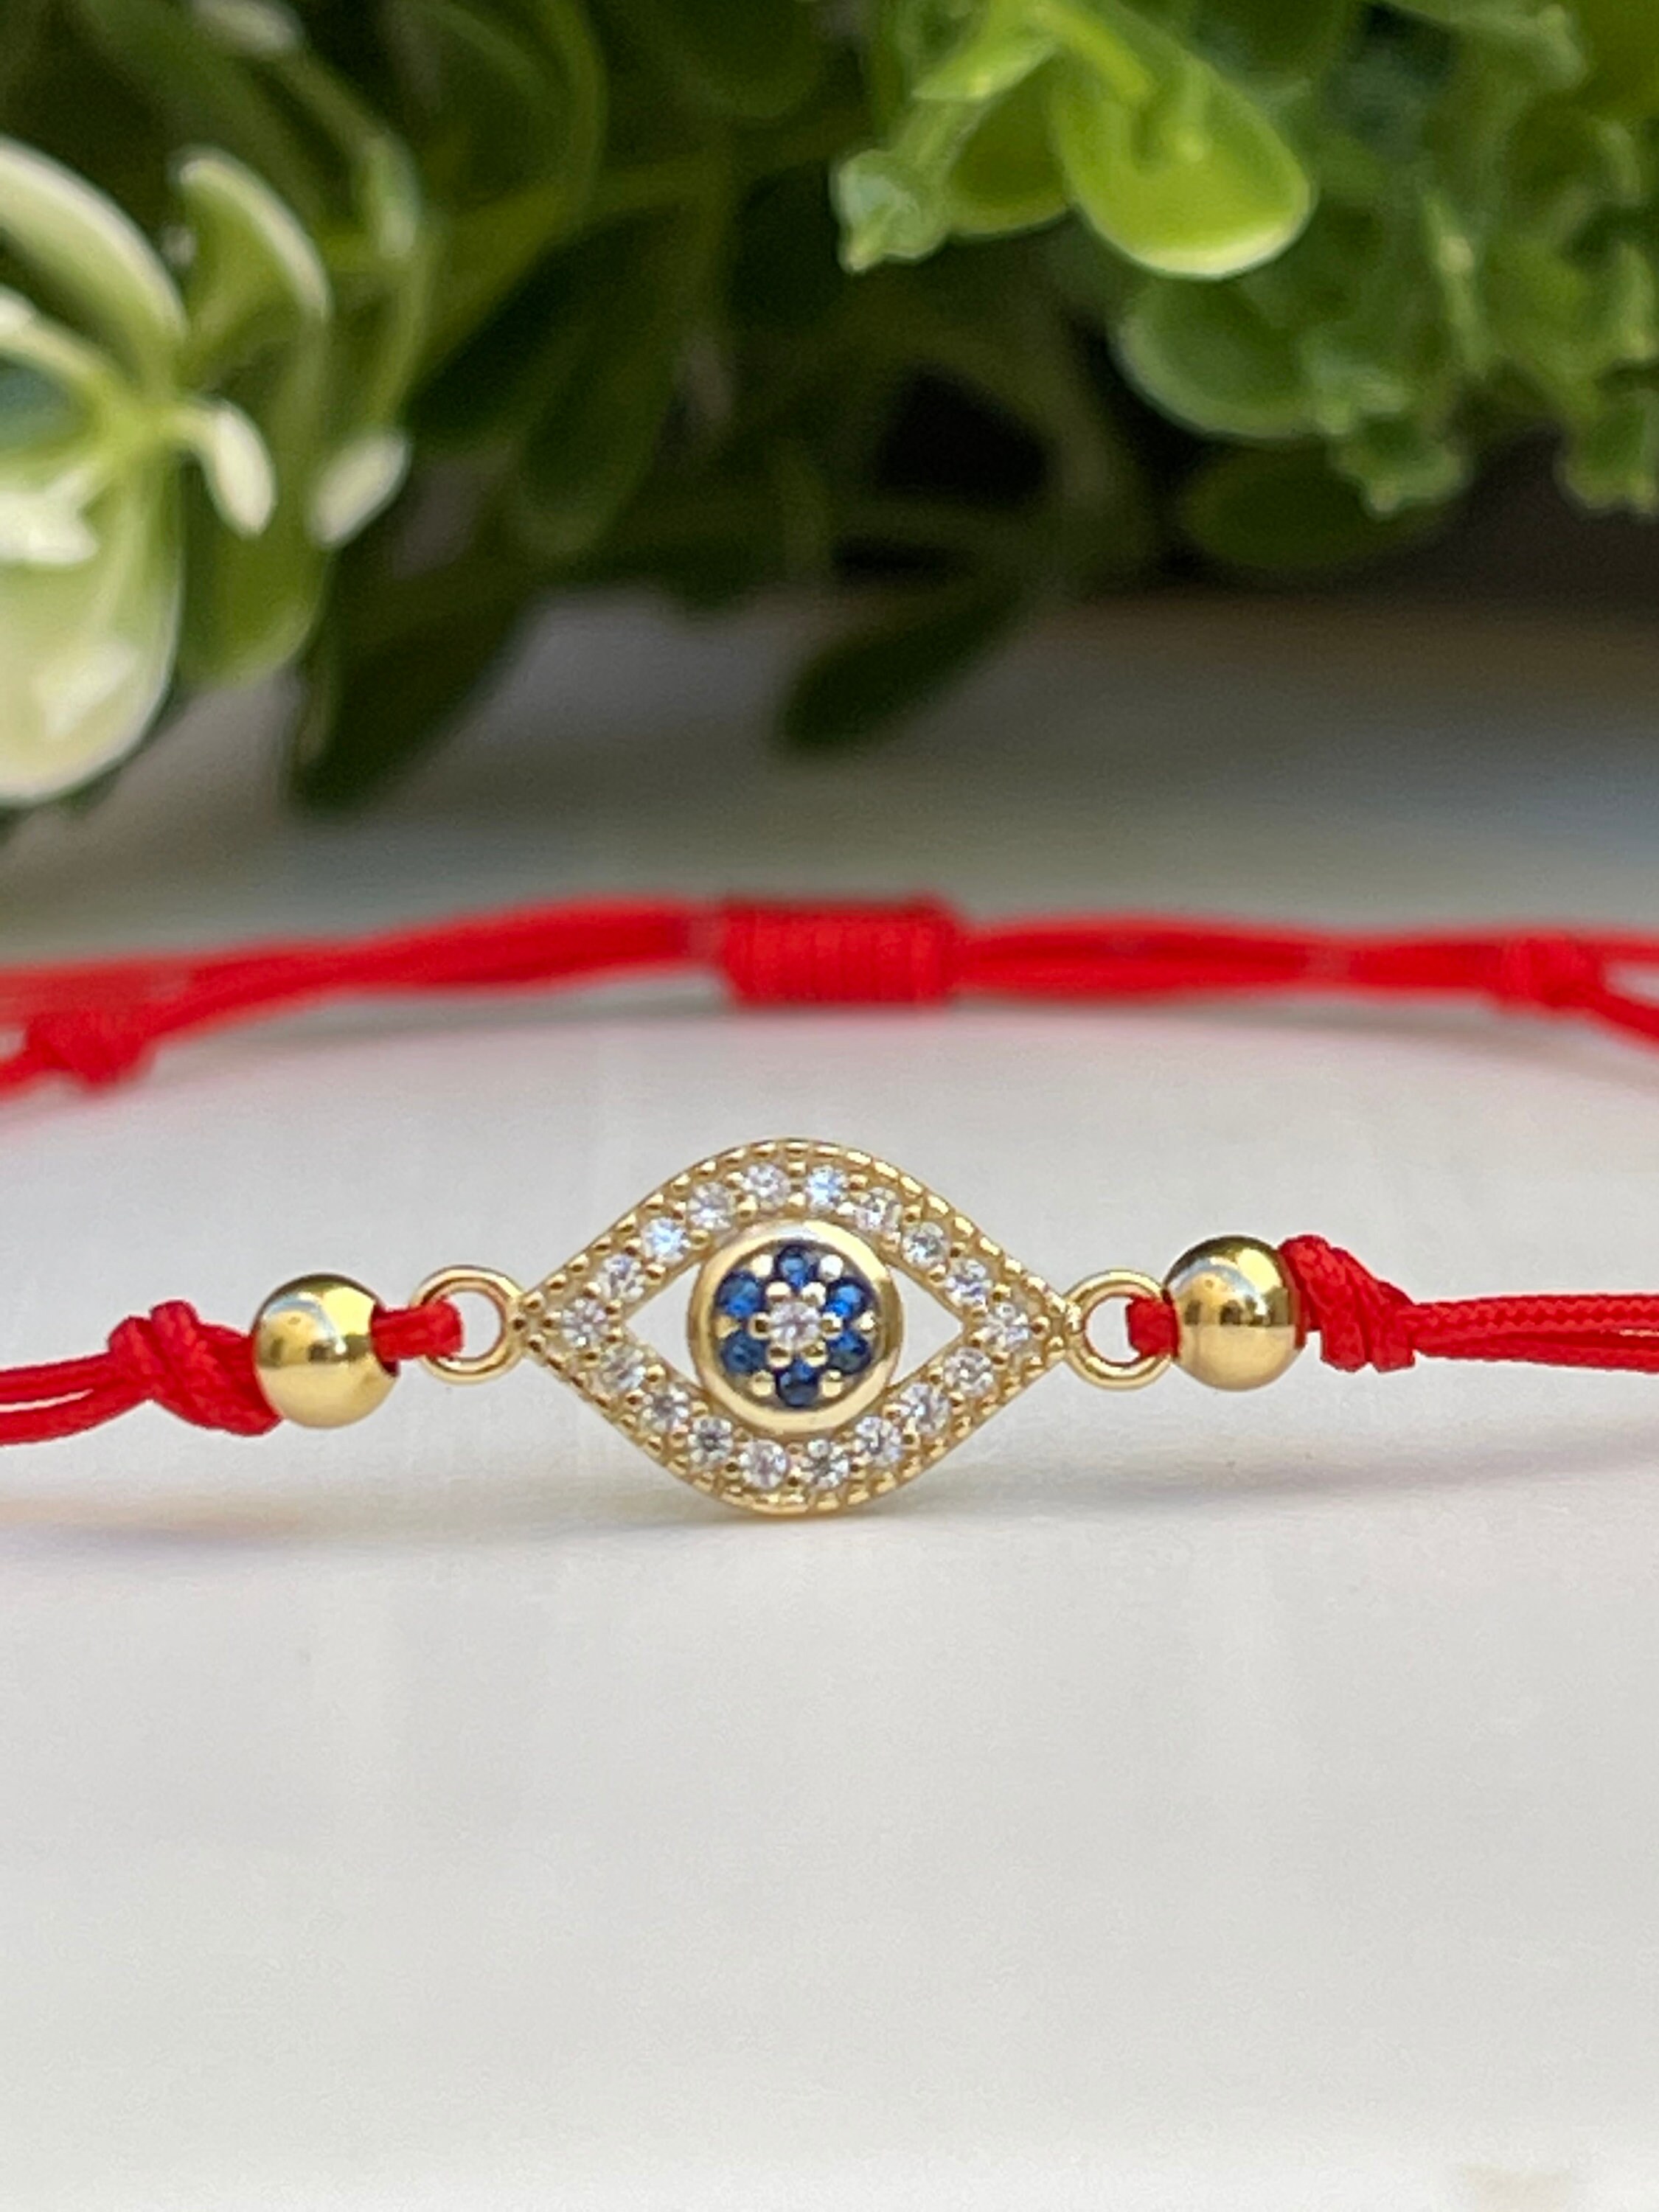 Amulet Attract Wealth, Kabbalah Bracelet Red, Feng Shui Bracelets